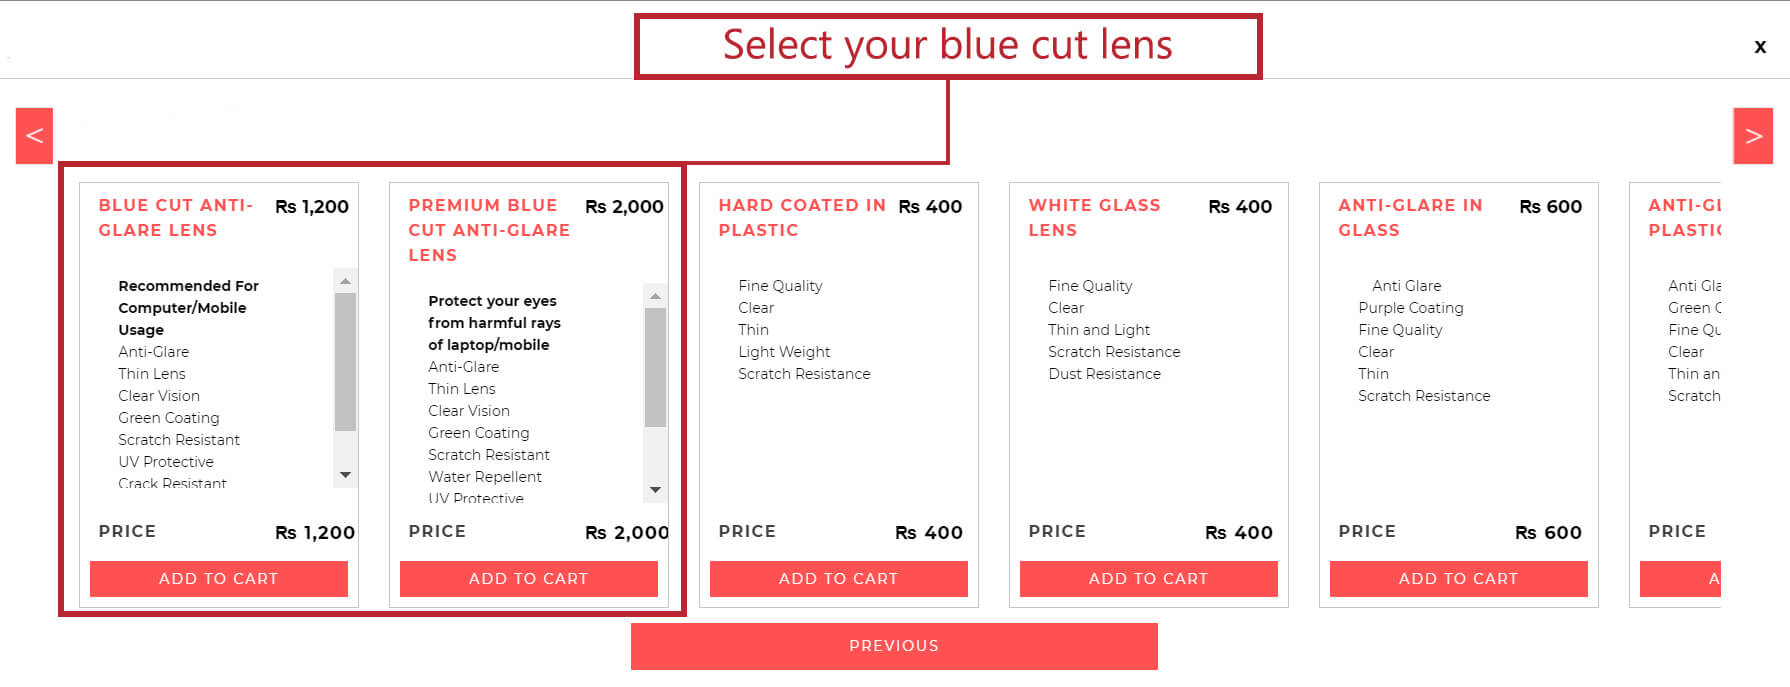 Blue Cut Lenses Price in Pakistan | Blue Light Blocking Glasses | Ainak.pk